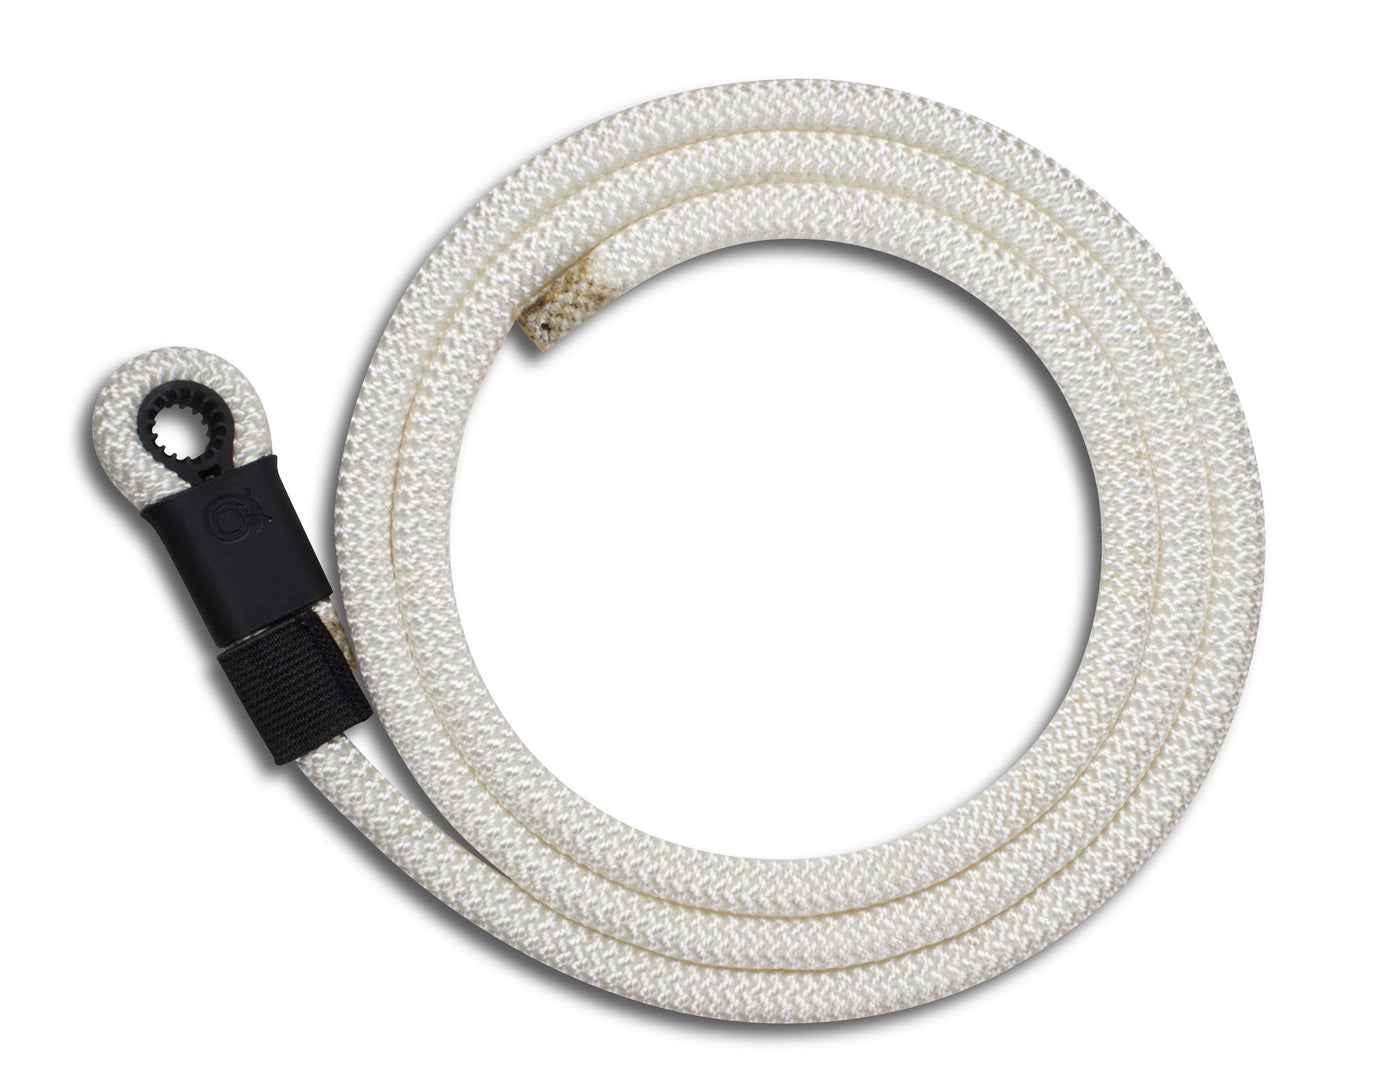 Lizard Tail Belts Natural white rope belt